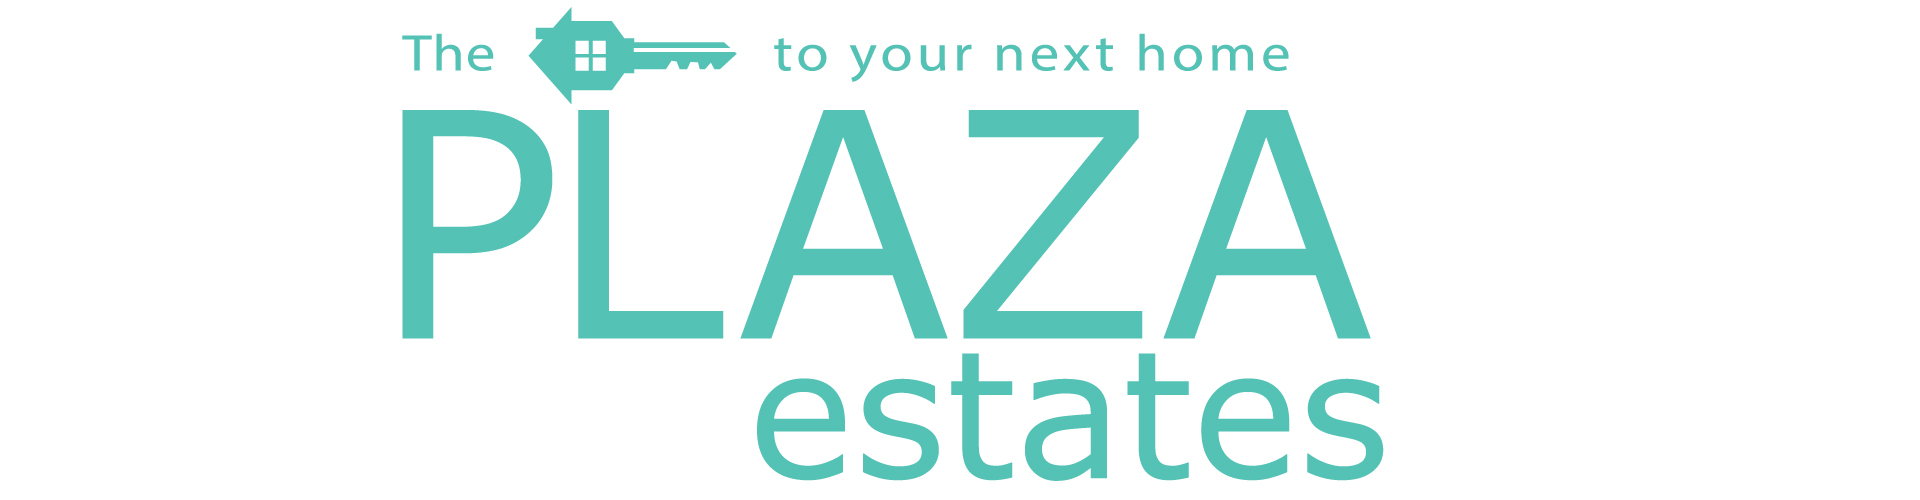 Plaza Estates logo